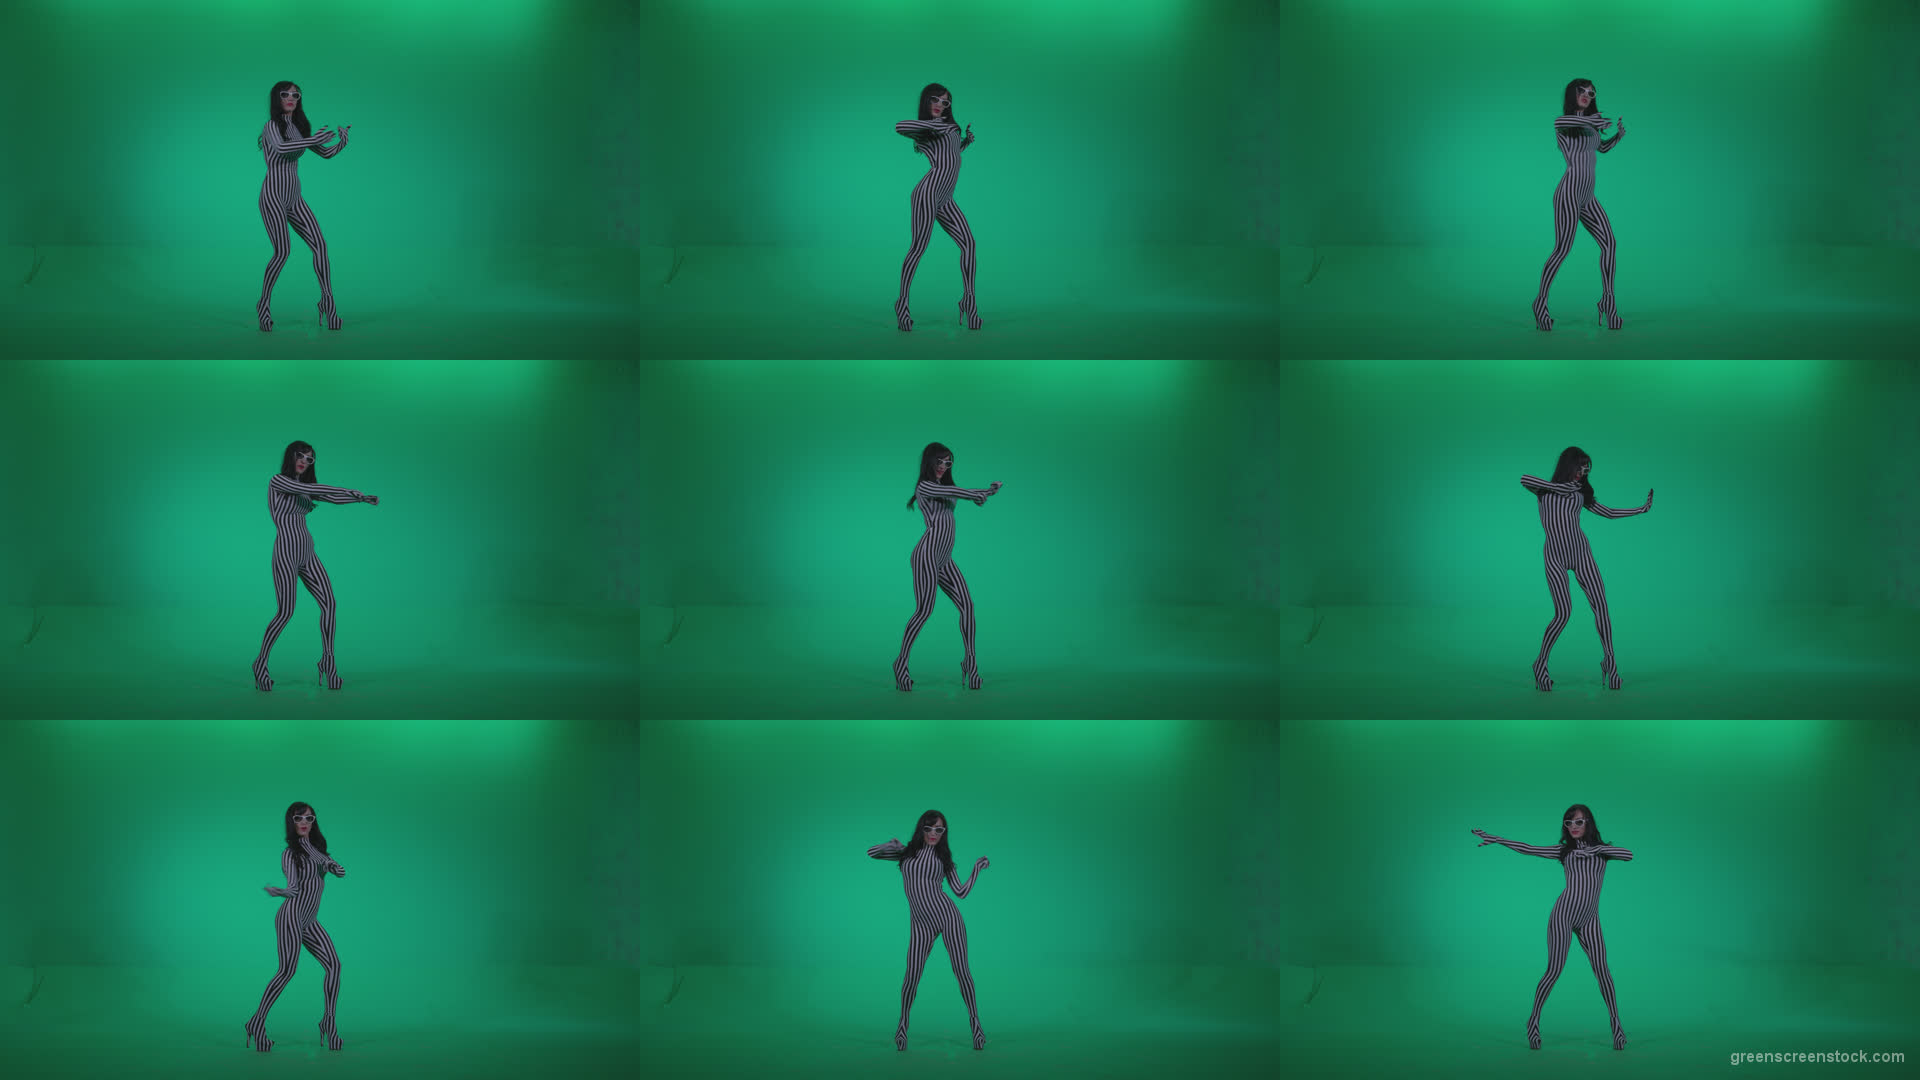 Go-go-Dancer-White-Stripes-s10-Green-Screen-Video-Footage Green Screen Stock